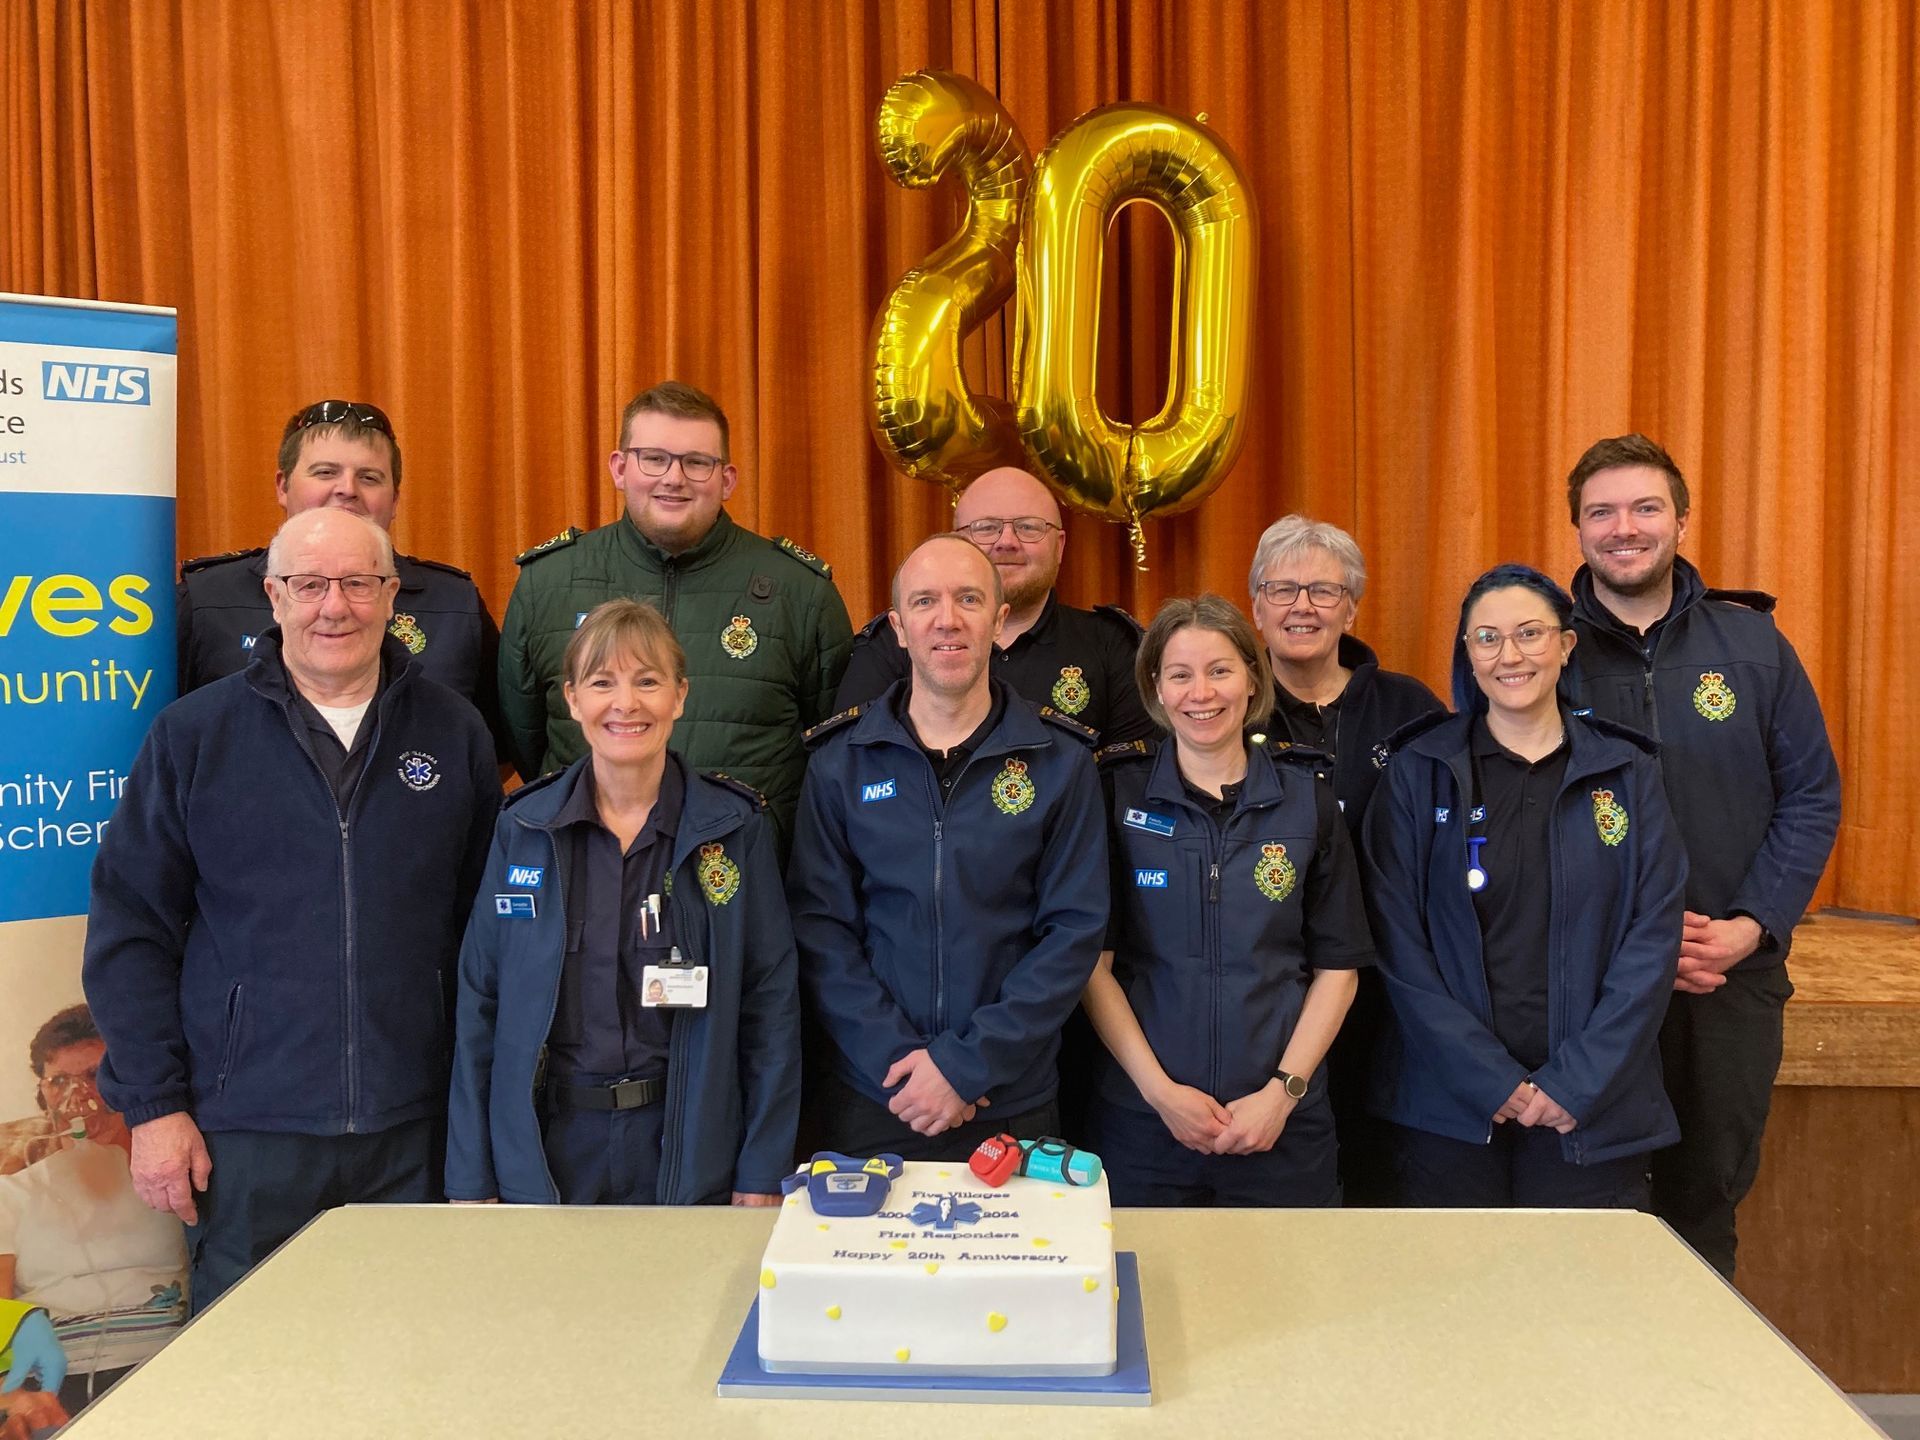 FVFR team celebrate 20 year anniversary.